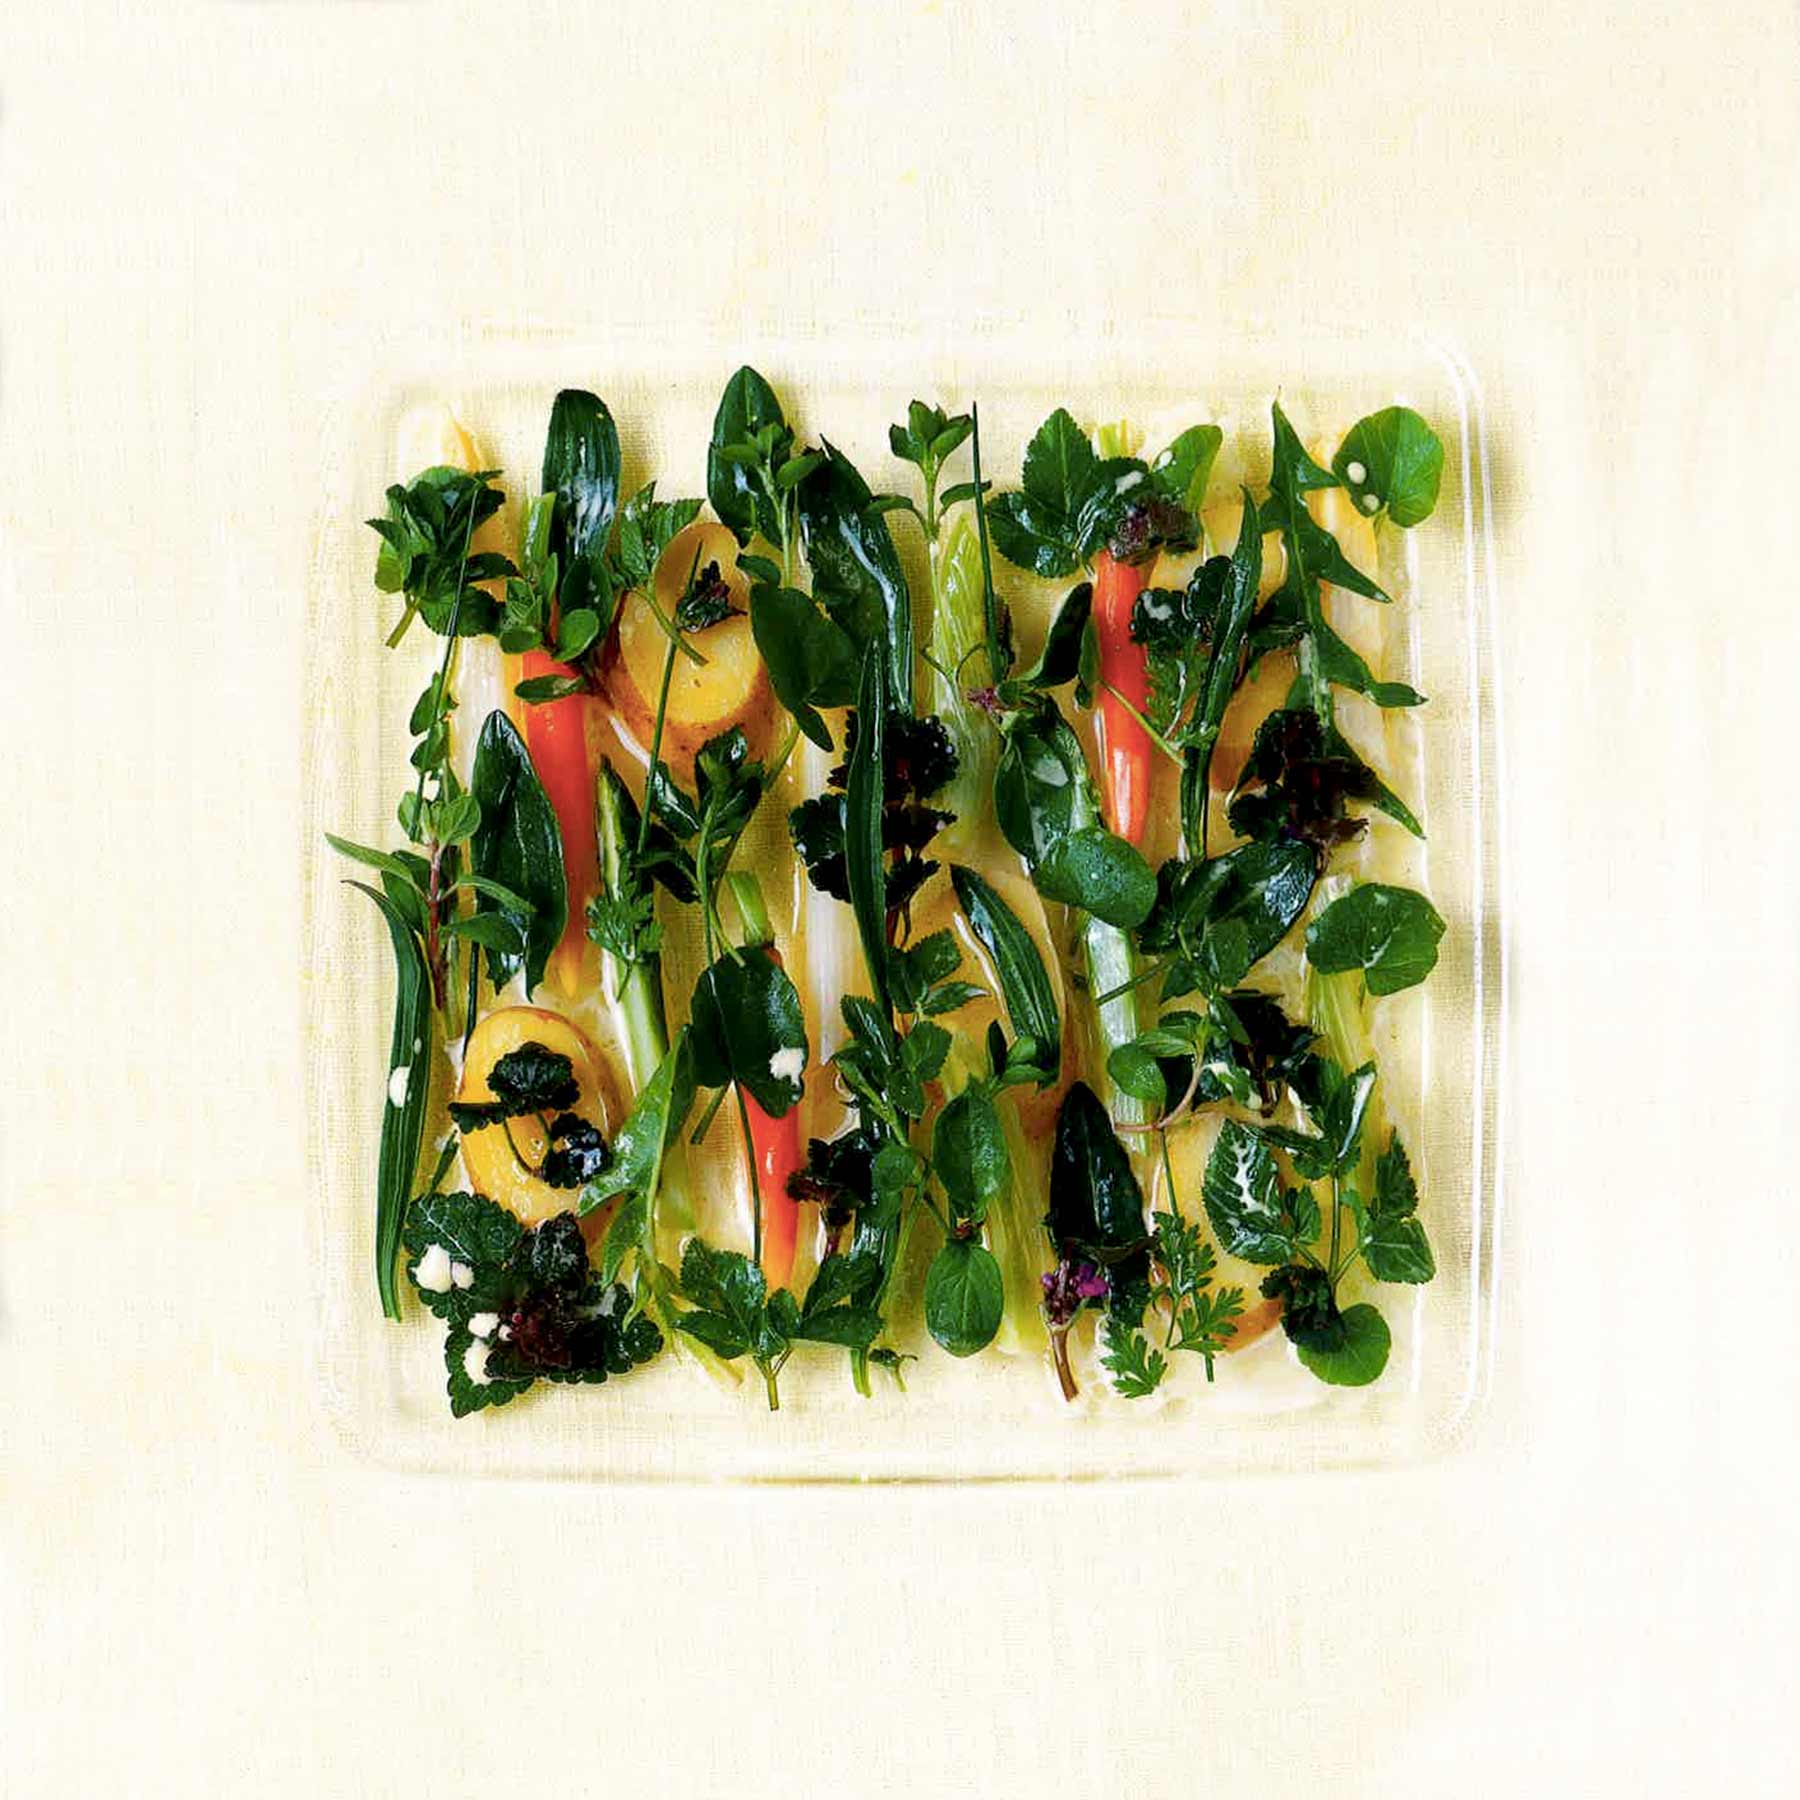 Wiesenkräuter-Salat mit Dressing und Frühlingsgemüse